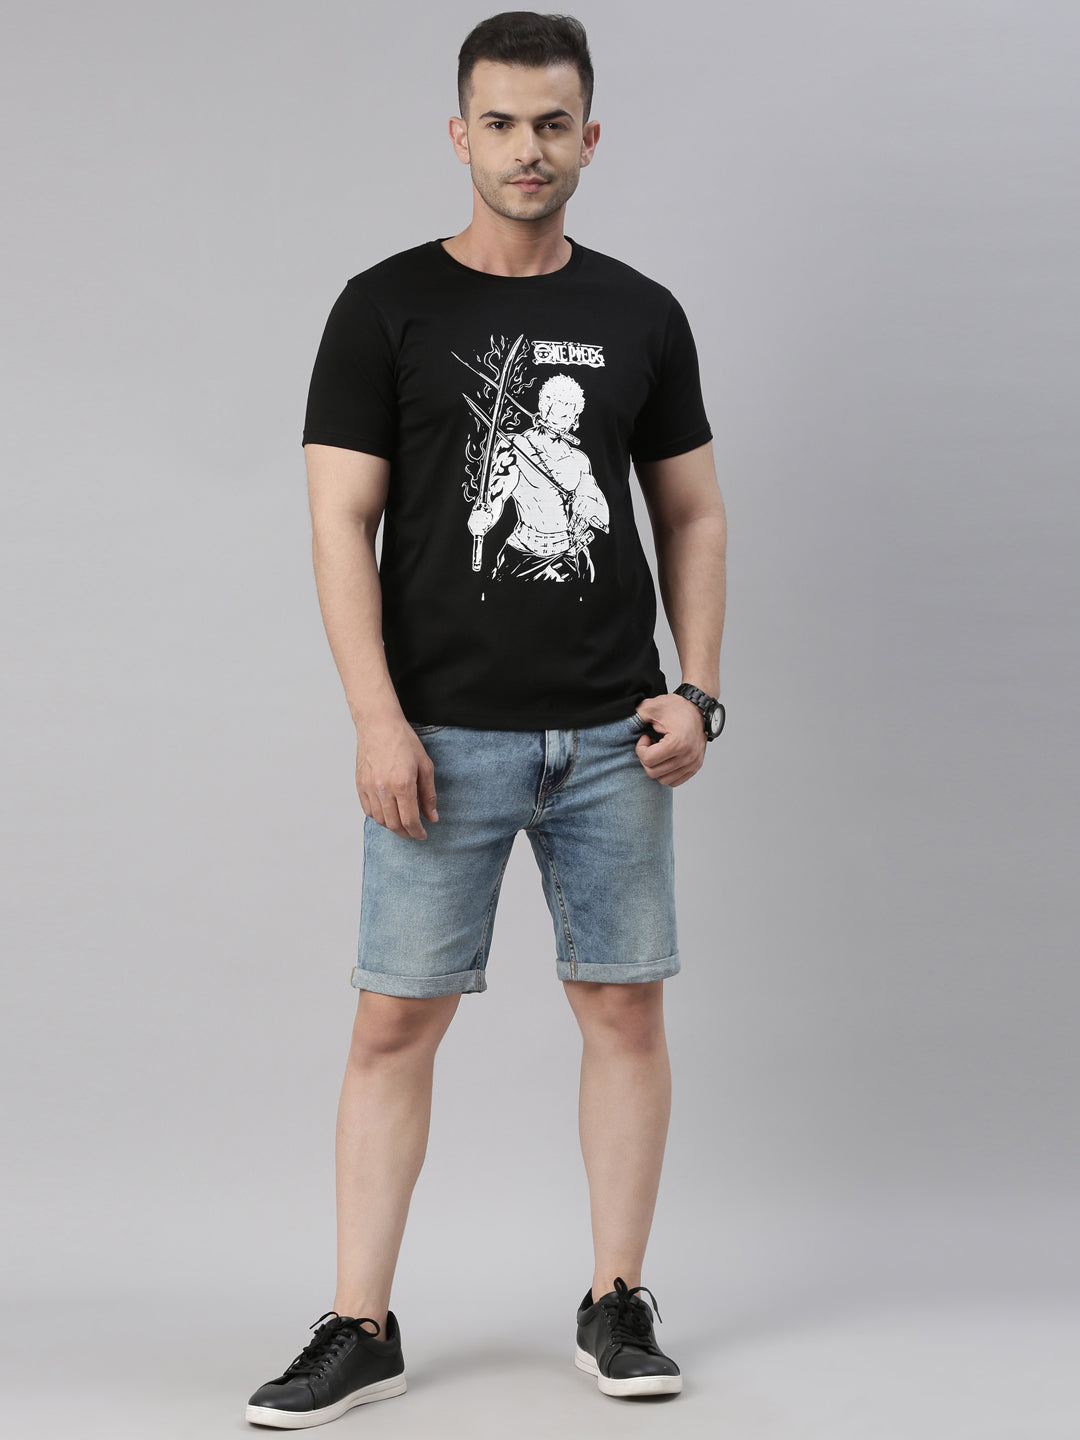 Roronoa Zoro - One Piece Black Anime T-Shirt Graphic T-Shirts Bushirt   